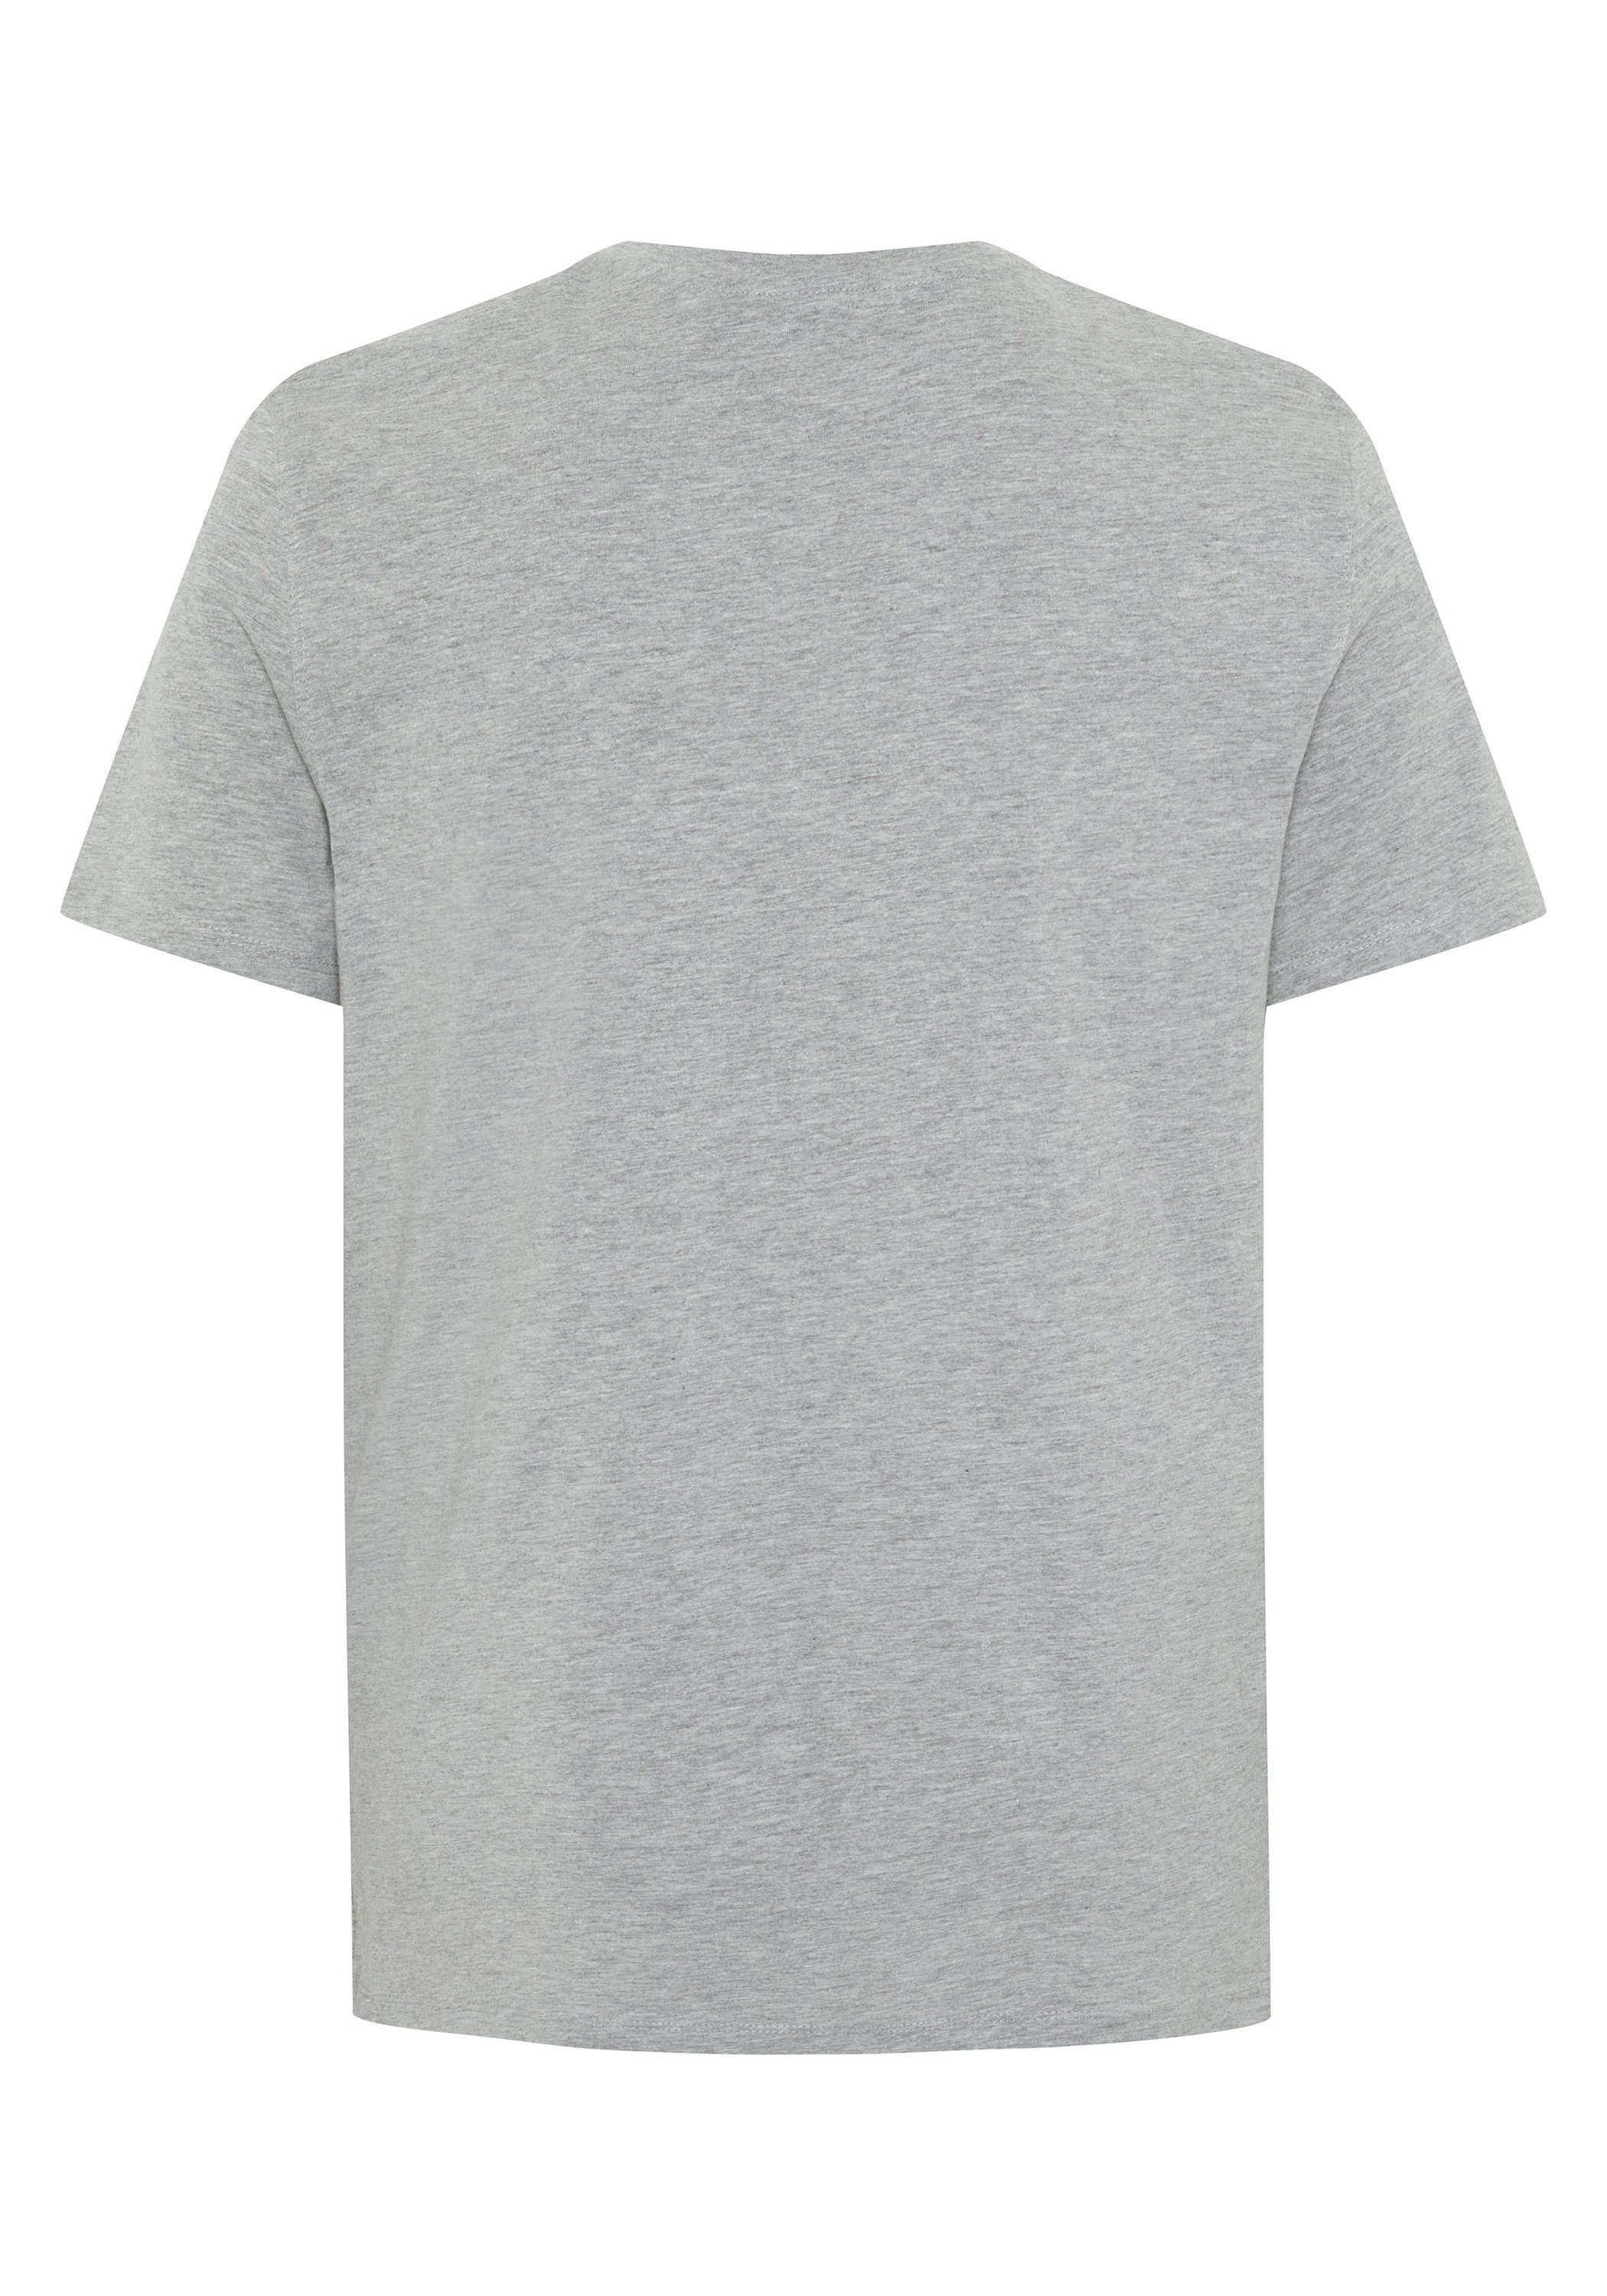 Print-Shirt Gray mit auffälligem Neutral 17-4402M Logo-Print Melange Sylt Polo